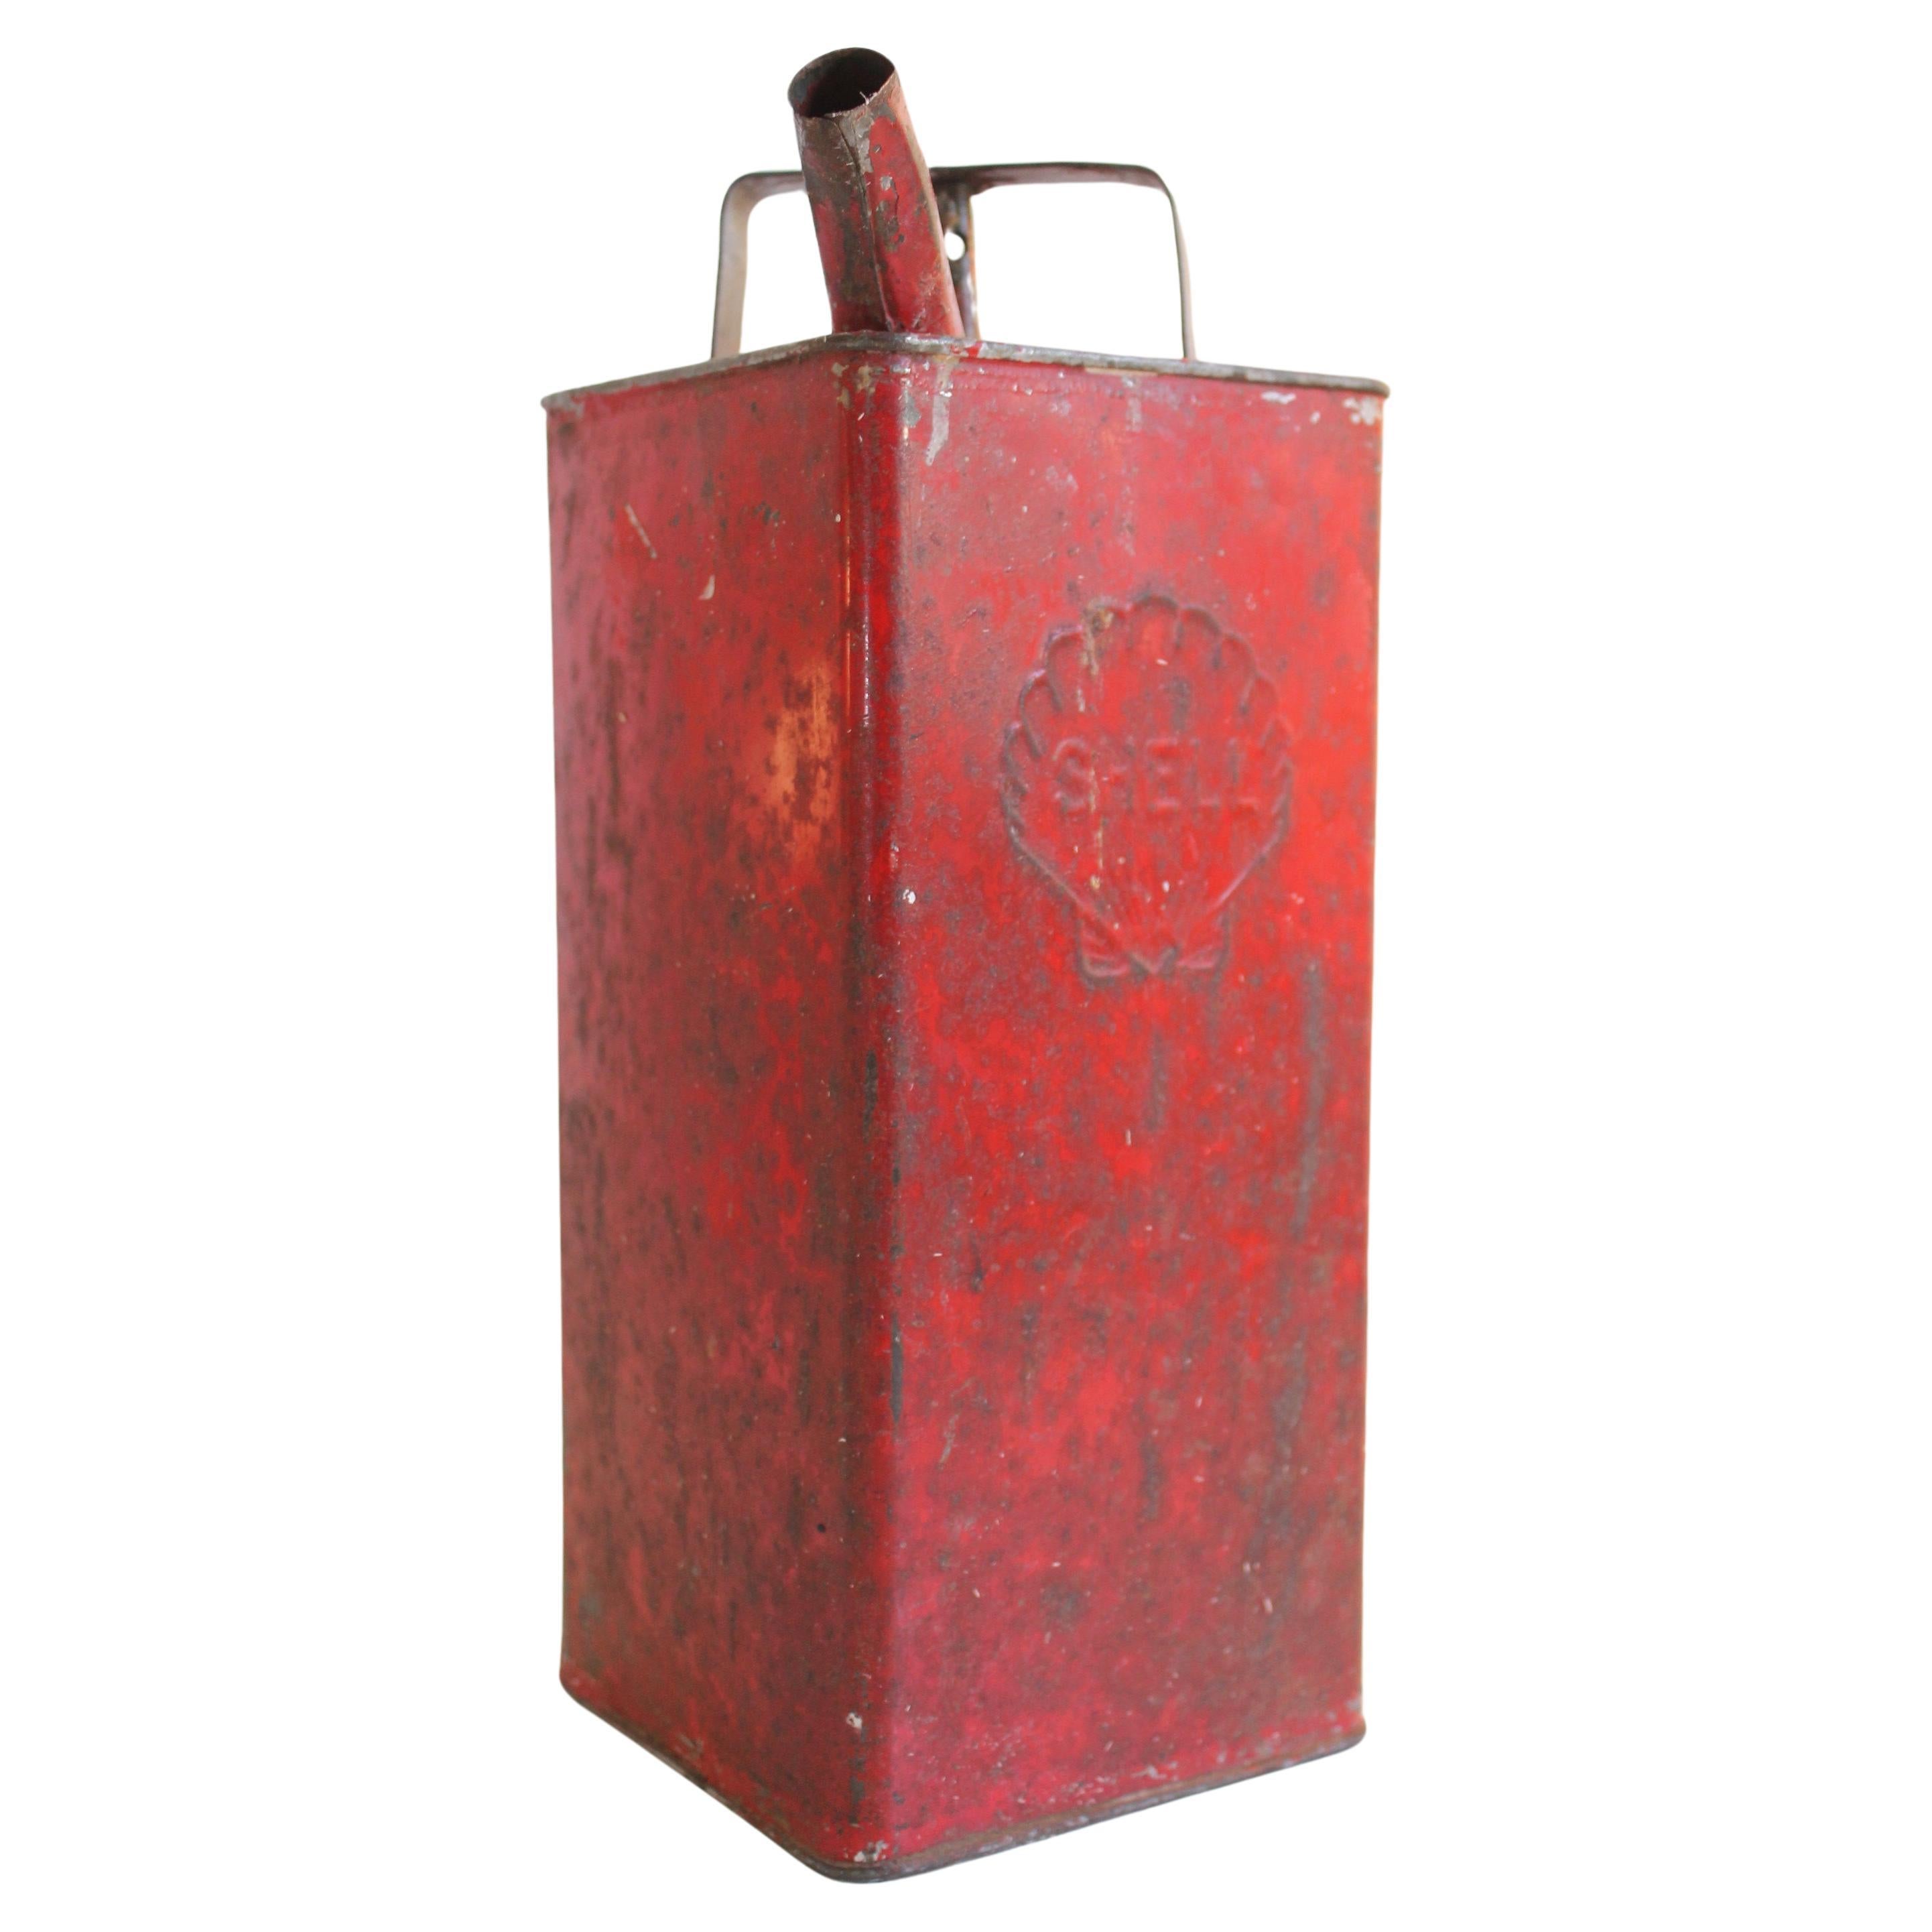 SHELL V.B 1954. (32x13x13) Rare Original Vintage Oil / Petrol can, complete!